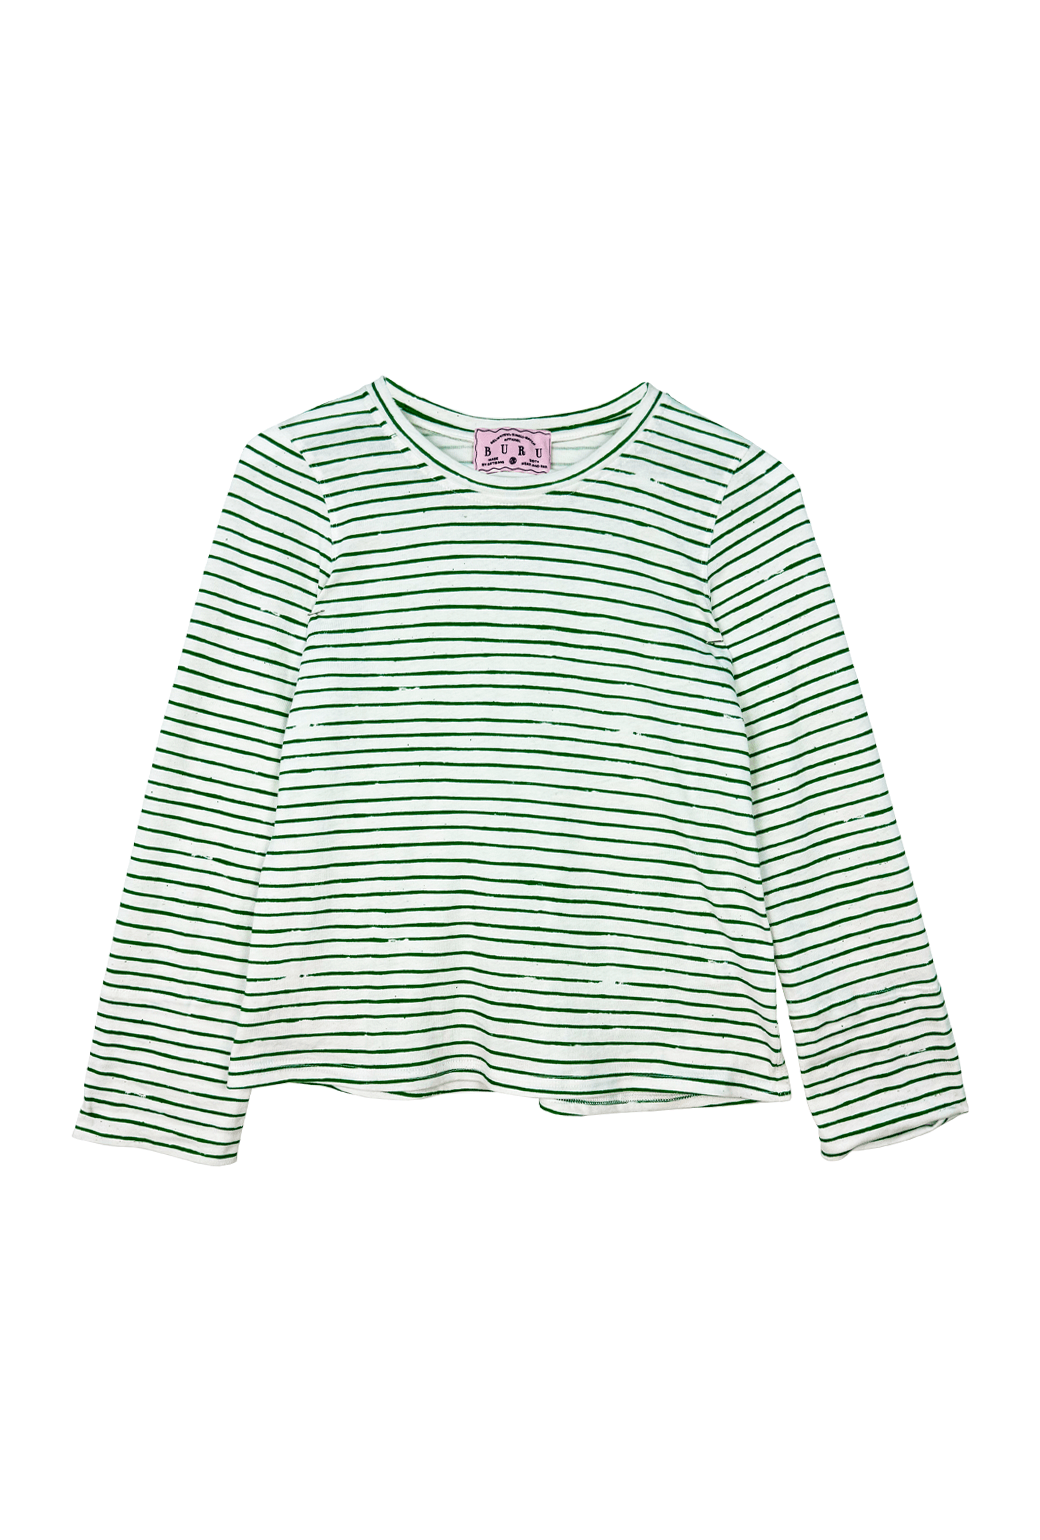 Clementine Shirt, Long Sleeve, Natural Stripe